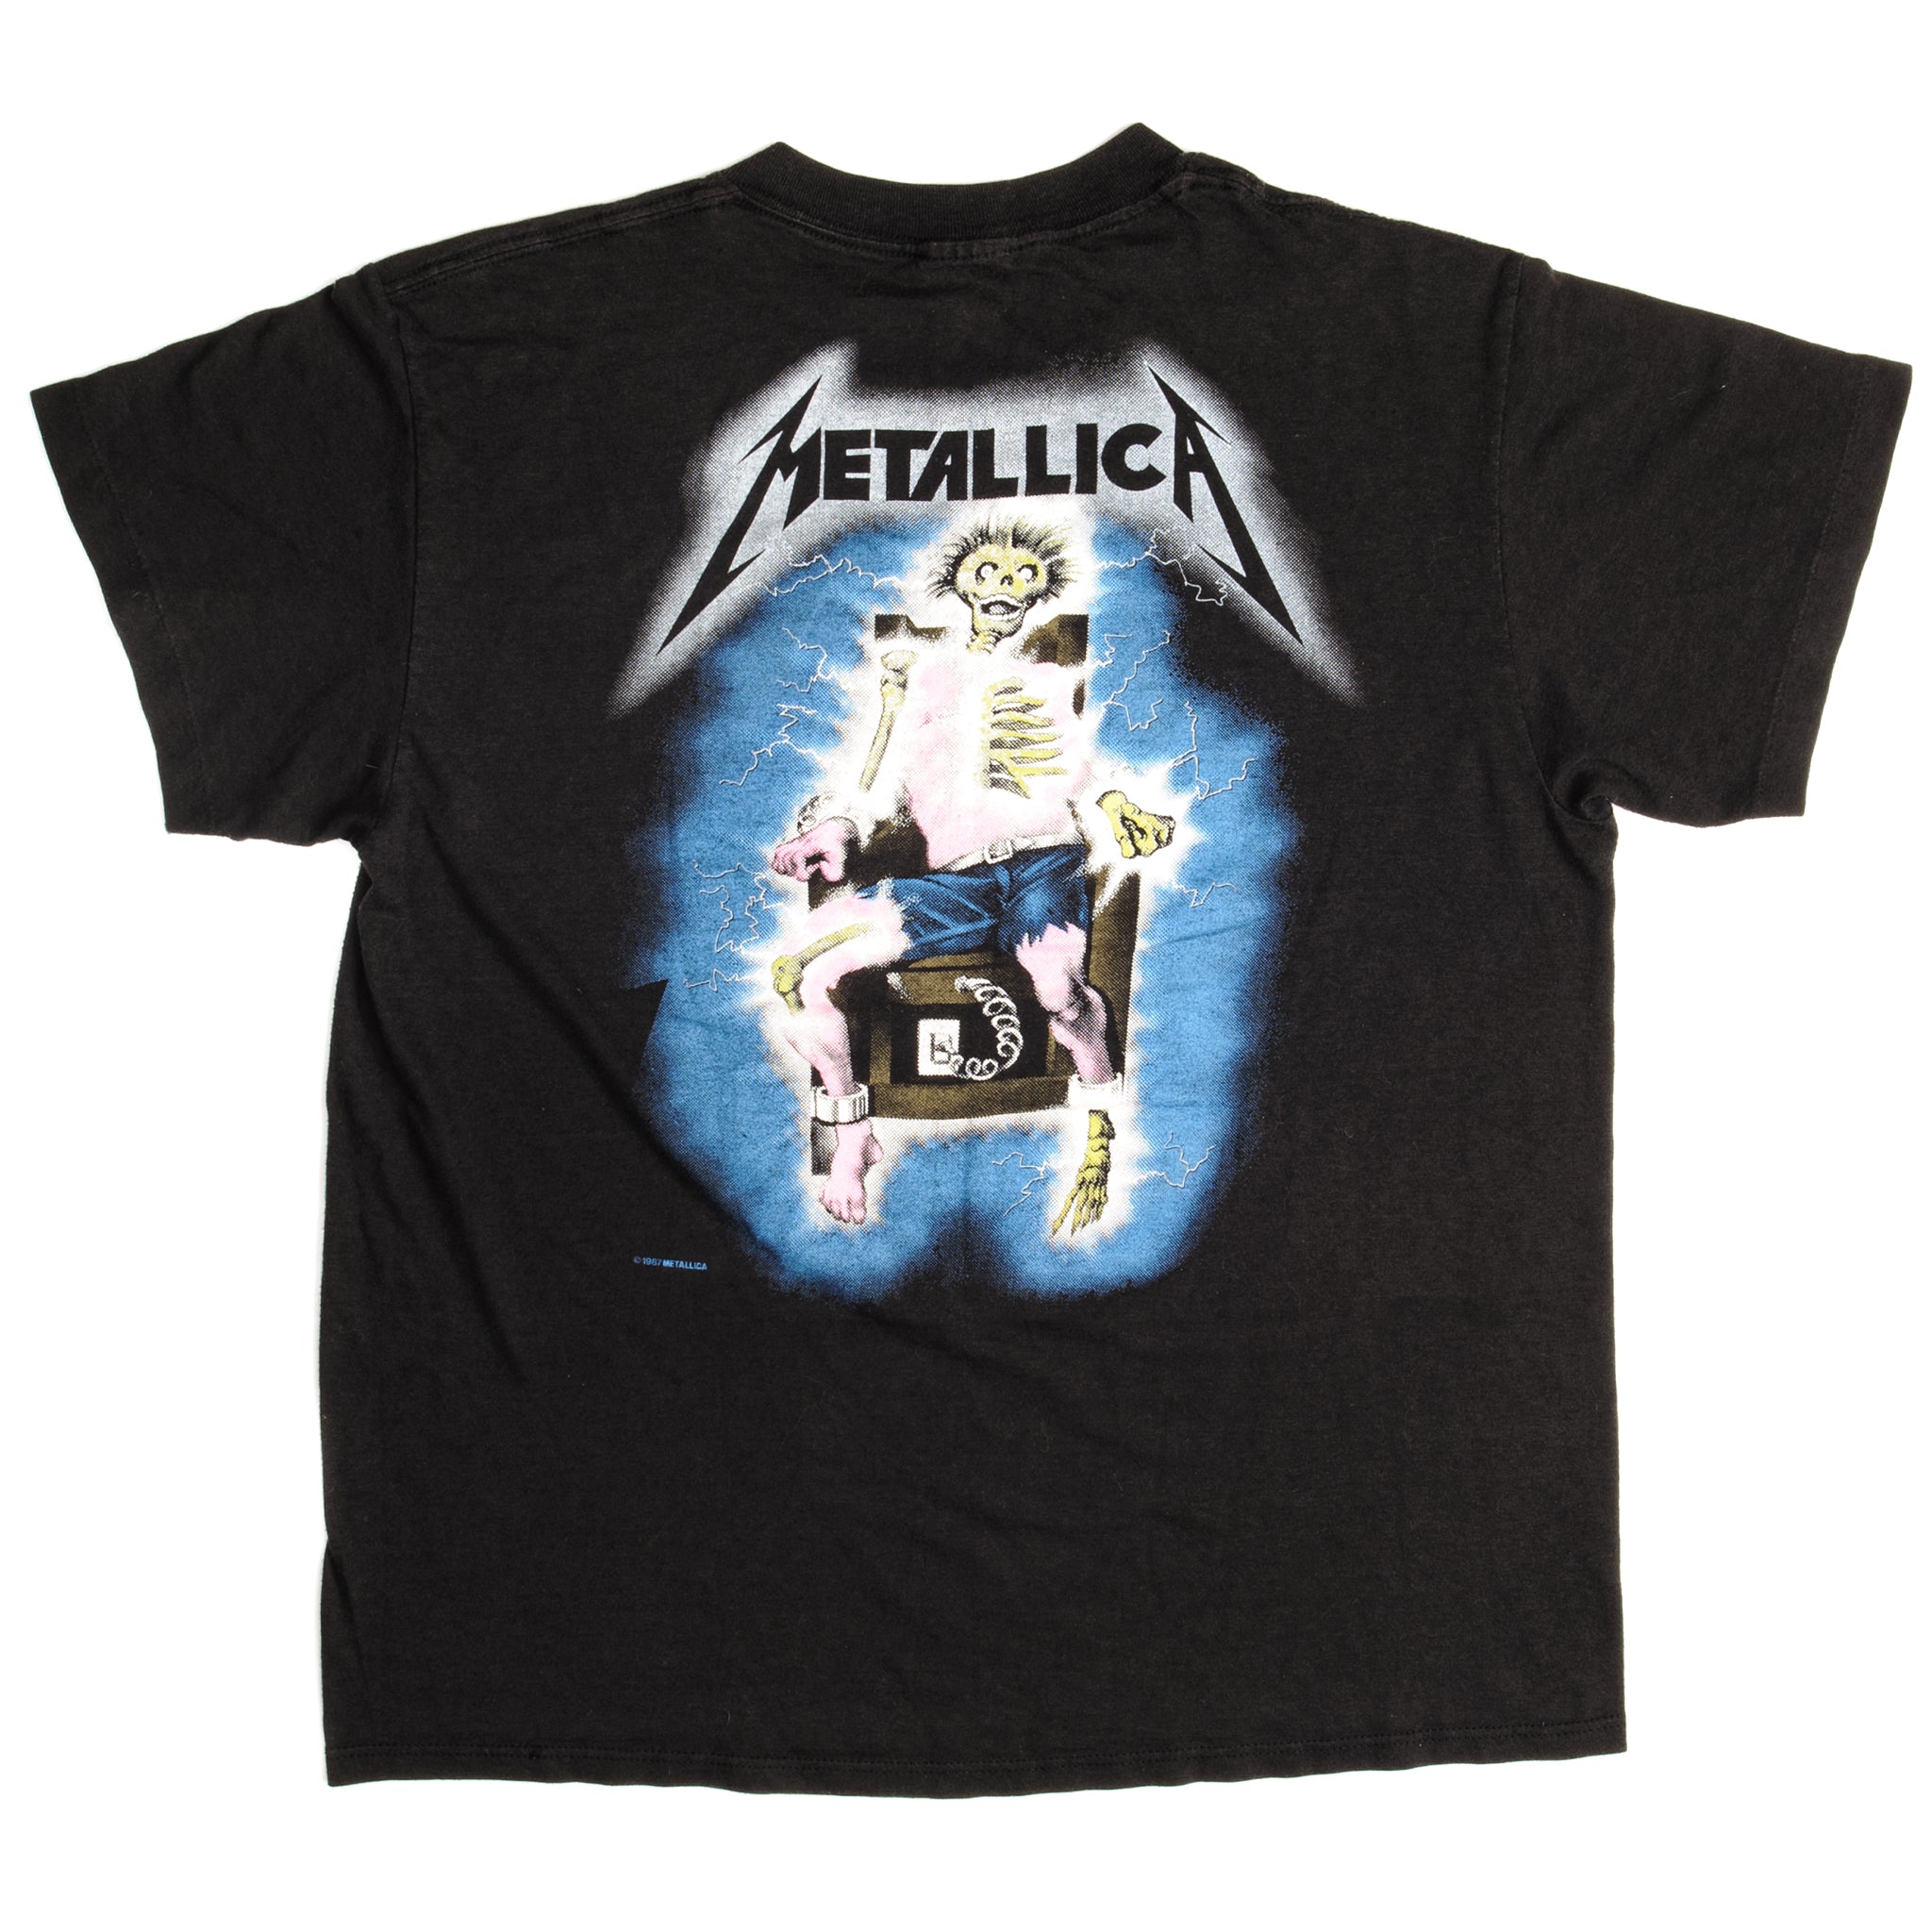 Want a Vintage Metallica T-Shirt? That'll be $1,000 - WSJ